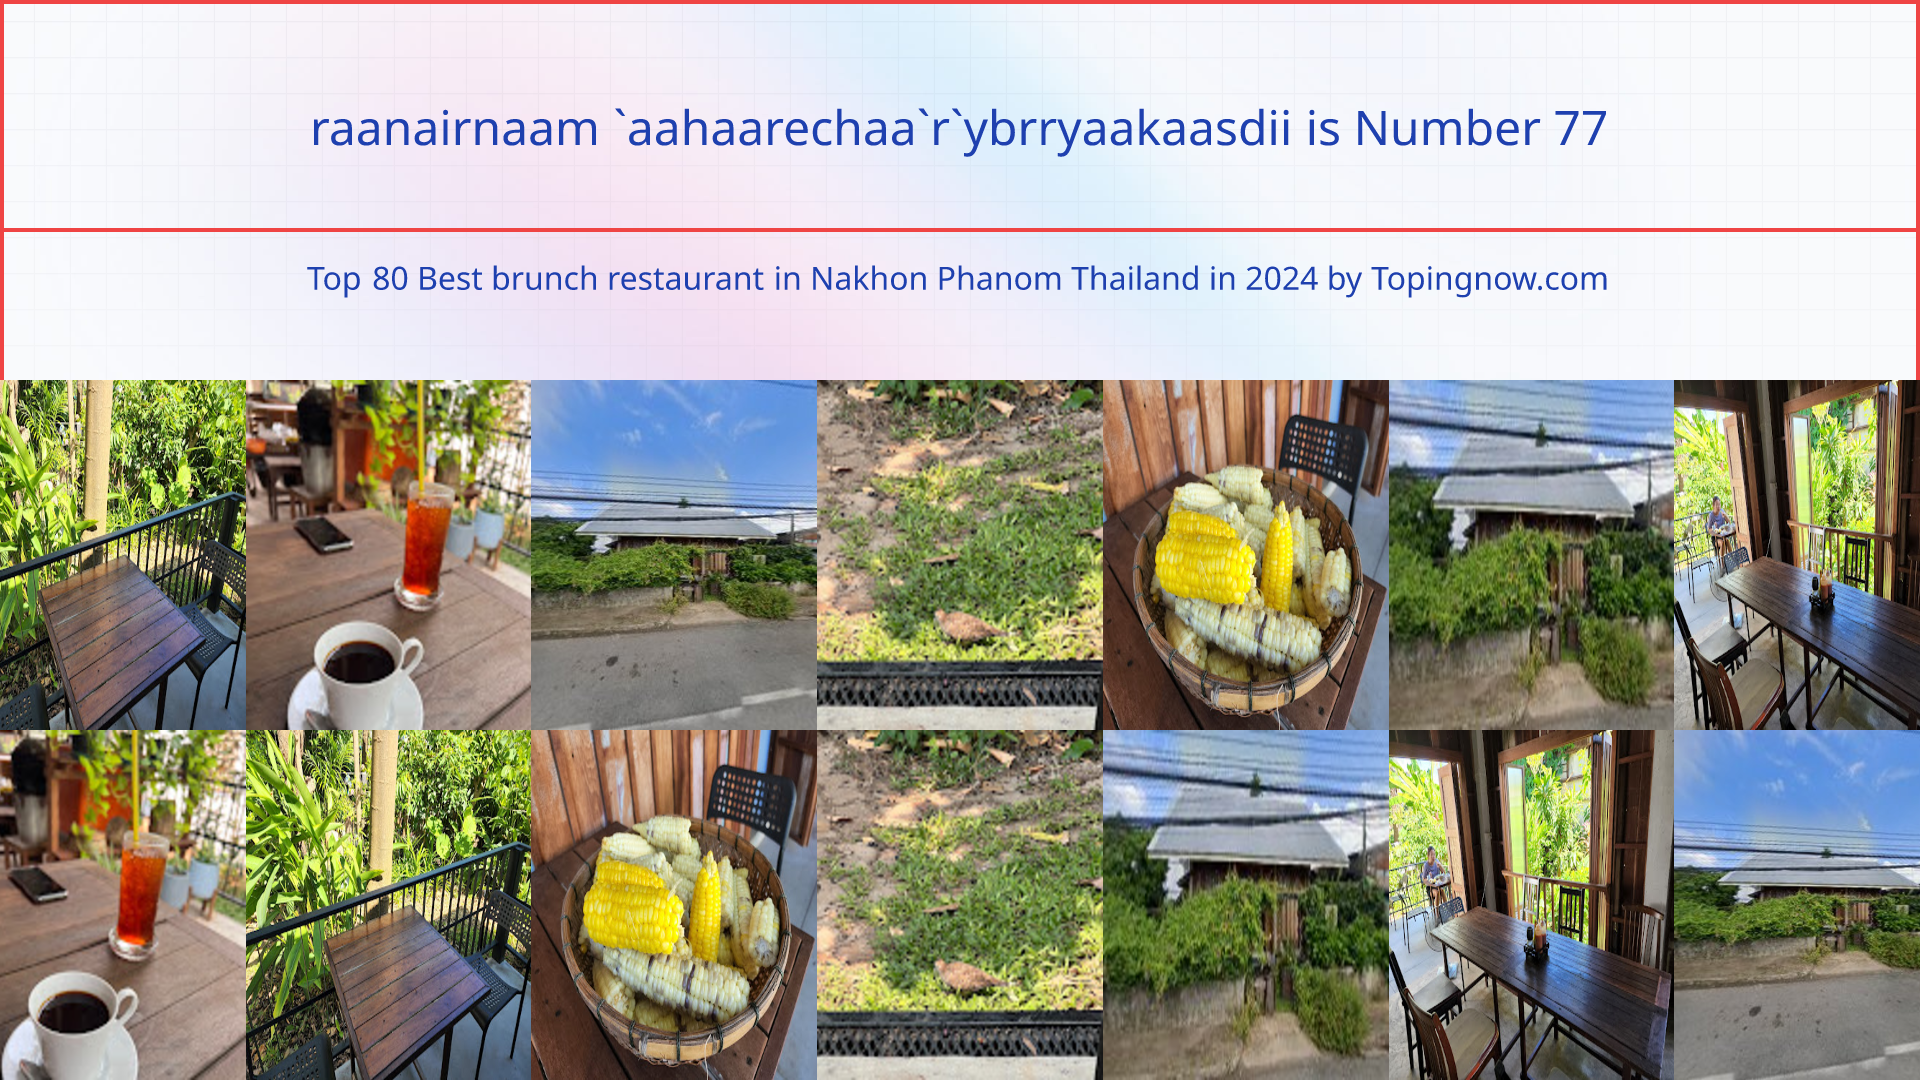 raanairnaam `aahaarechaa`r`ybrryaakaasdii: Top 80 Best brunch restaurant in Nakhon Phanom Thailand in 2024